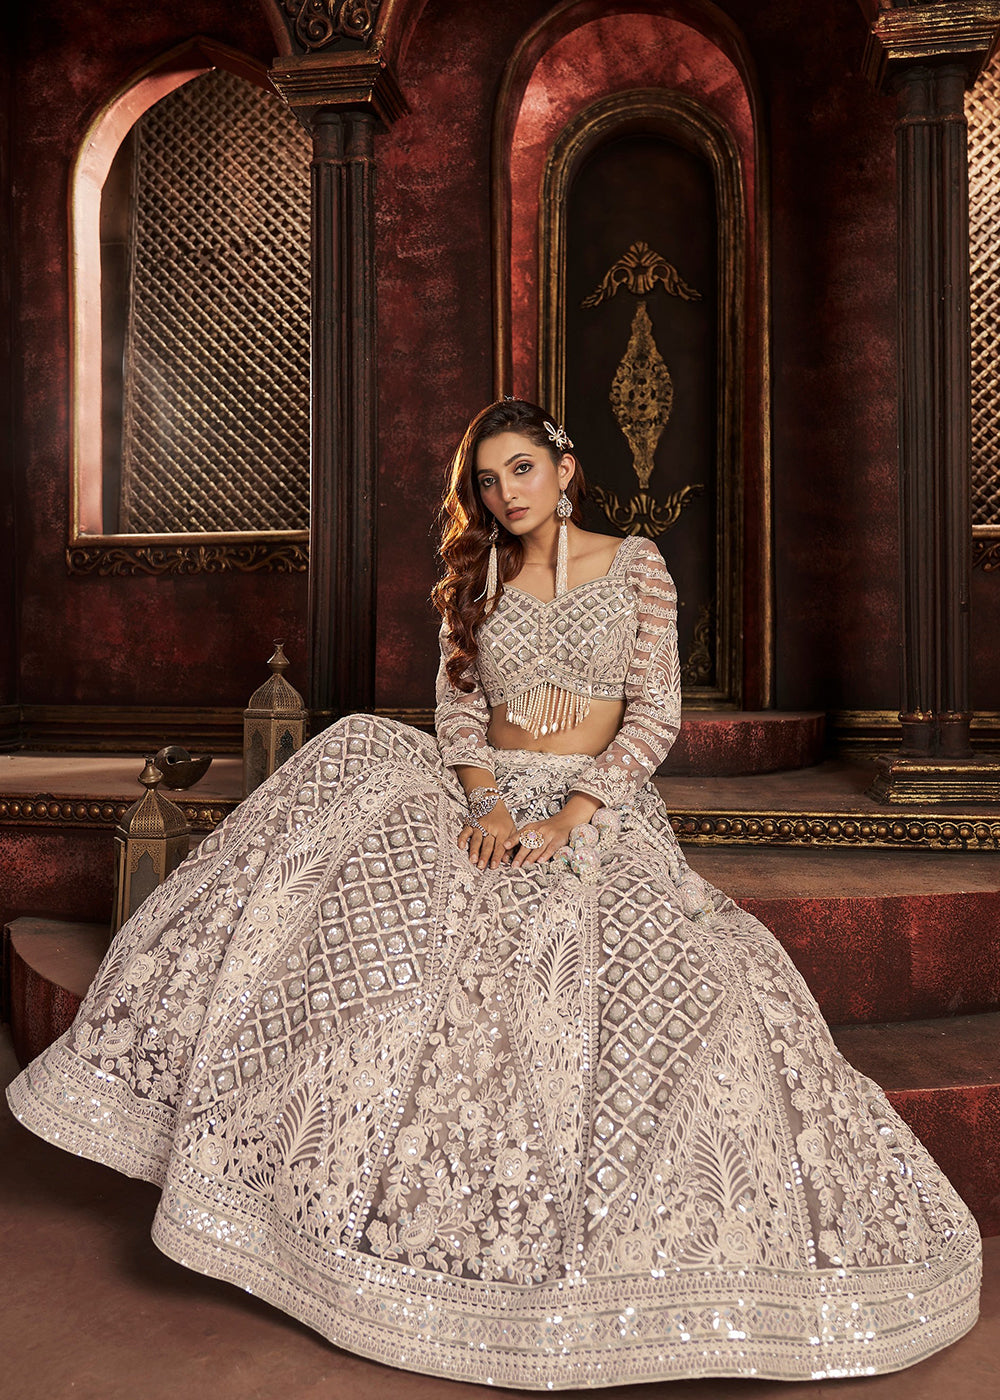 Buy Now Heavy Embroidered Grey Ivory Net Bridal Lehenga Choli Online in USA, UK, Canada & Worldwide at Empress Clothing. 